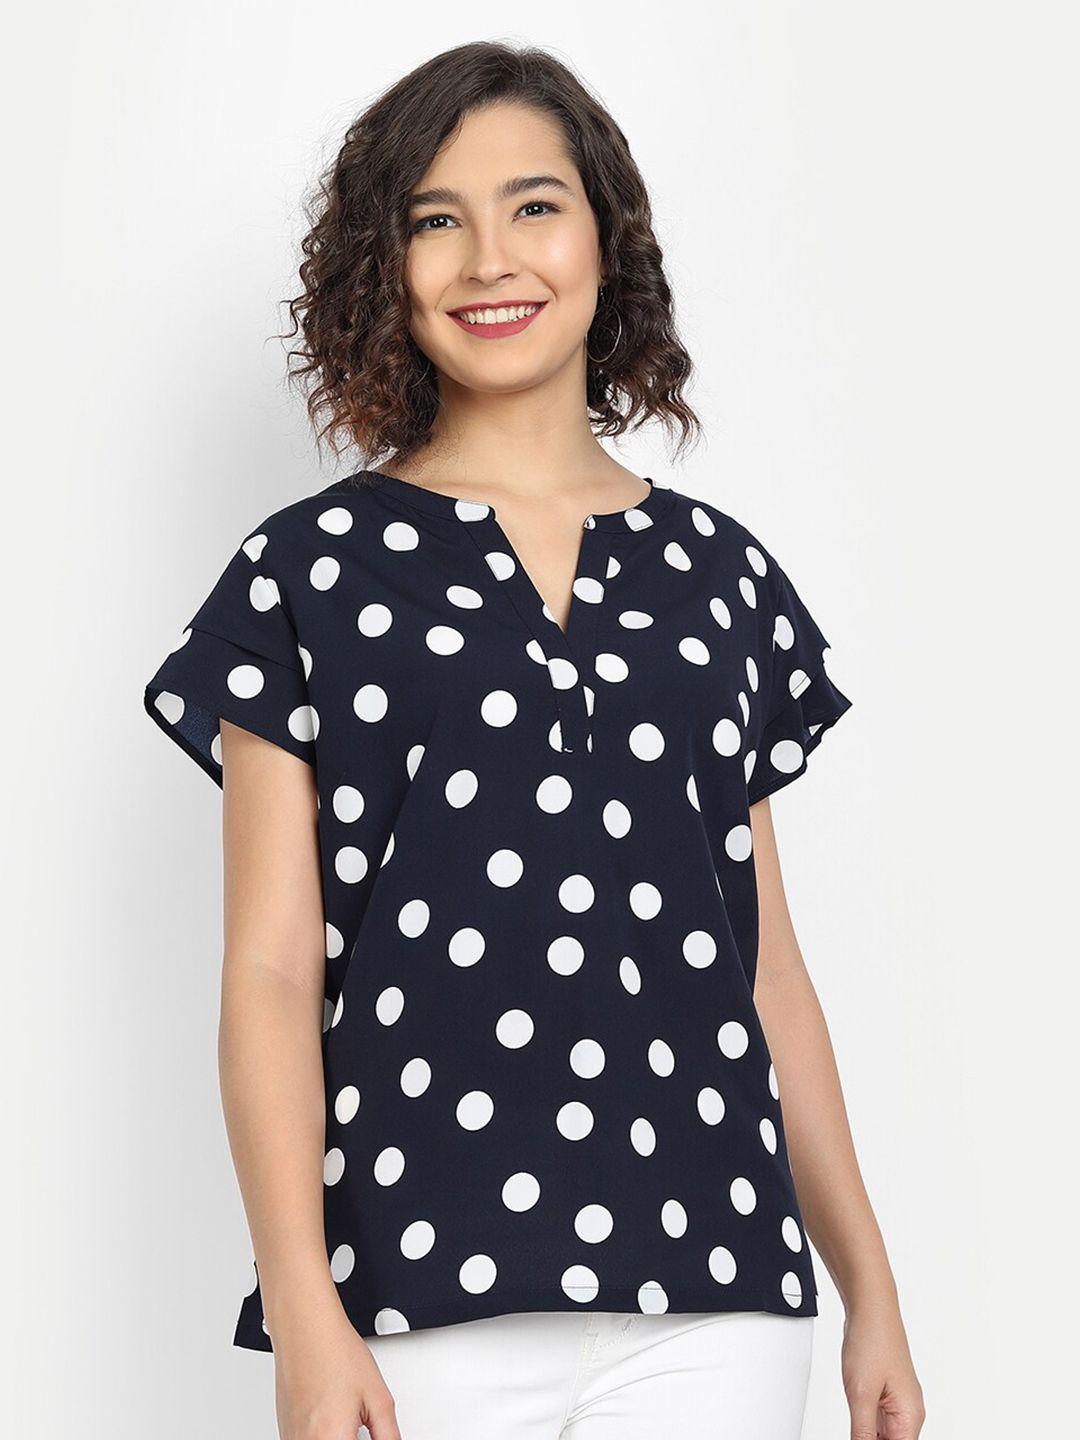 ix impression women black & white polka dot printed a-line top